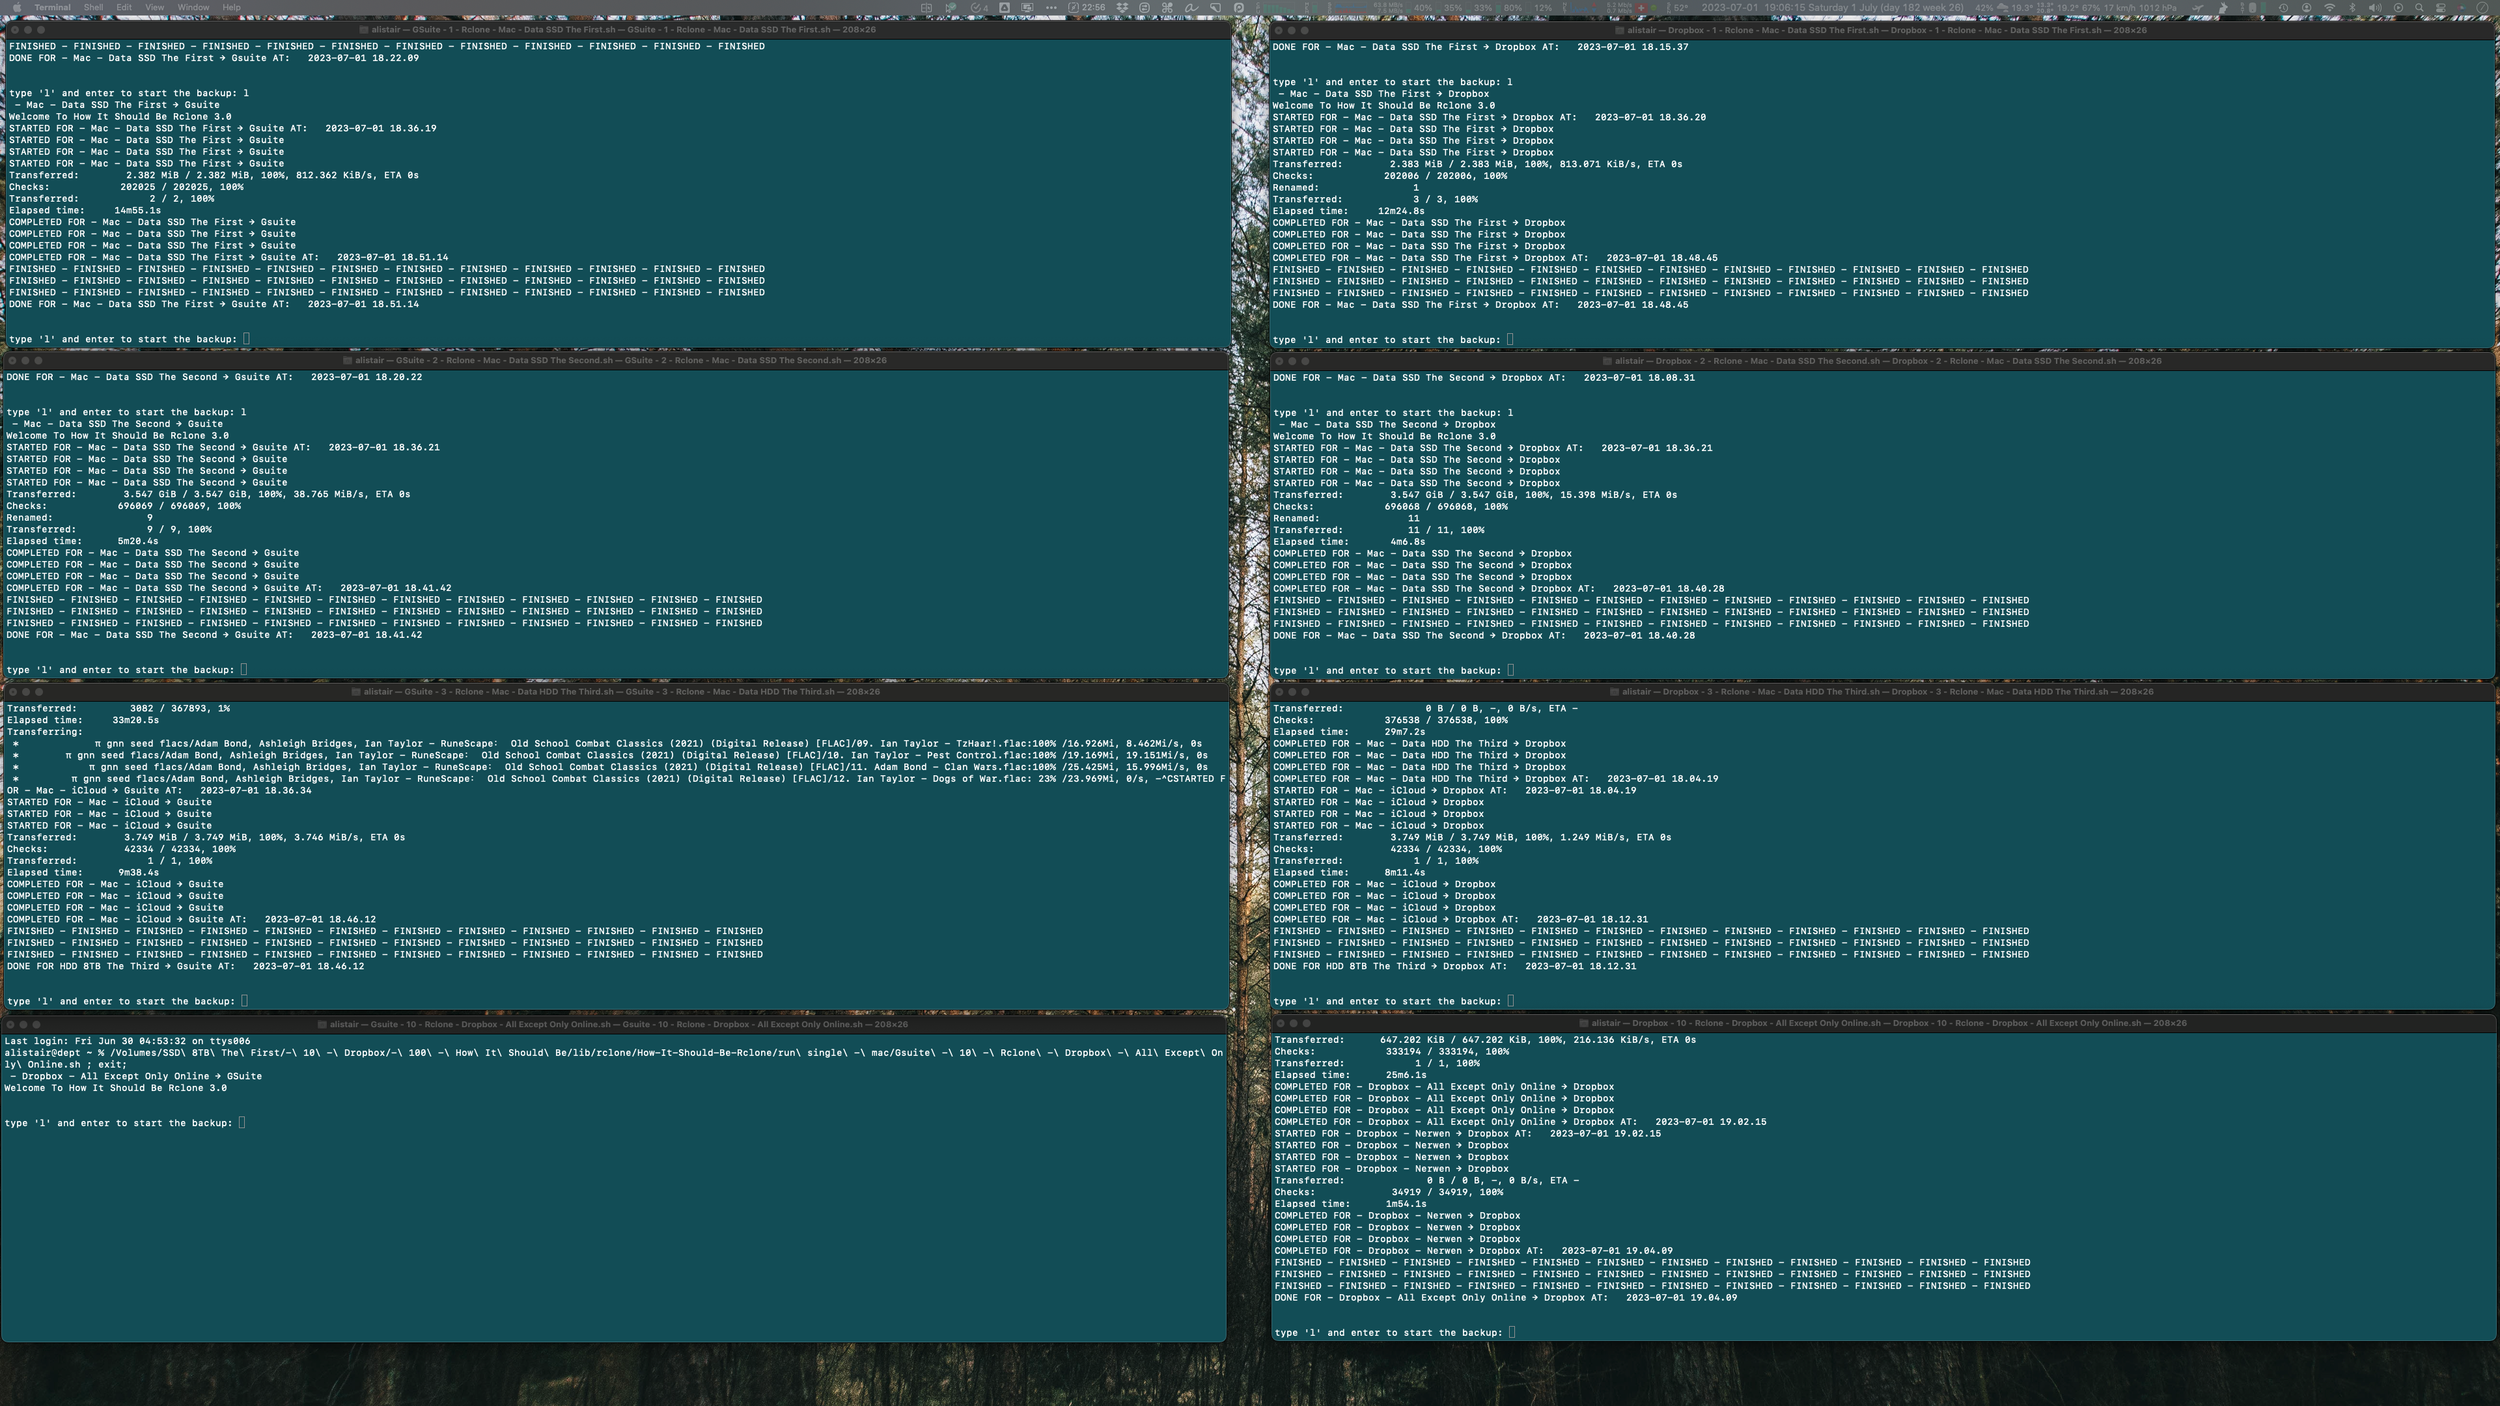 Screenshot 2023-07-01 19.06.16 - Mac 5 dept - Terminal - alistair — GSuite - 3 - Rclone - Mac - Data HDD The Third.sh — GSuite - 3 - Rclone - Mac - Data HDD The Third.sh — 208×26-1.png